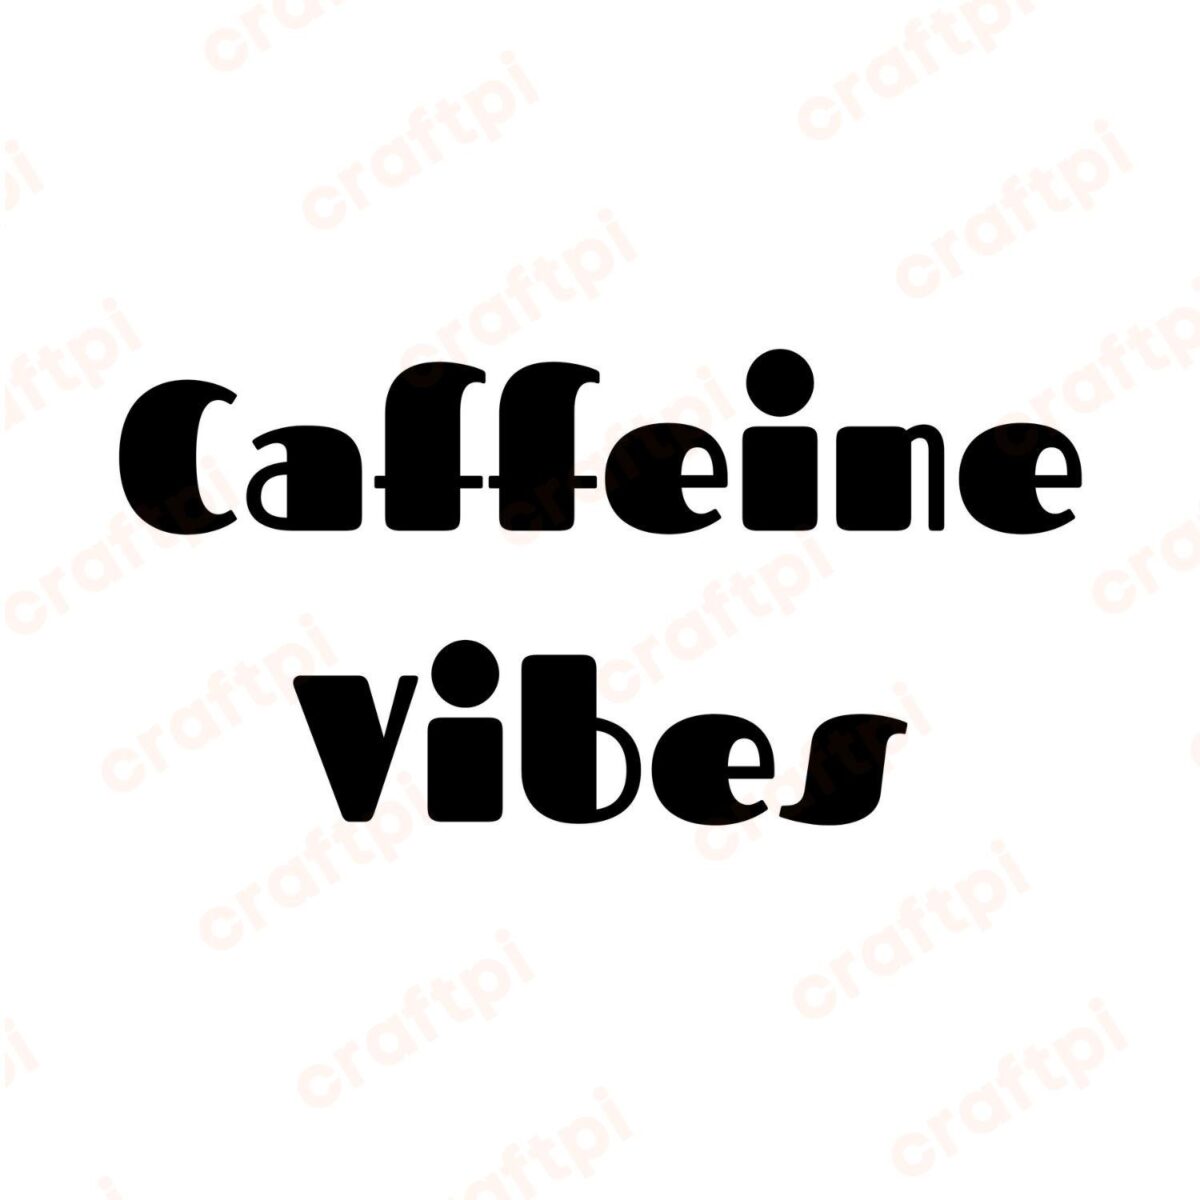 Caffeine Vibes SVG, PNG, JPG, PDF Files